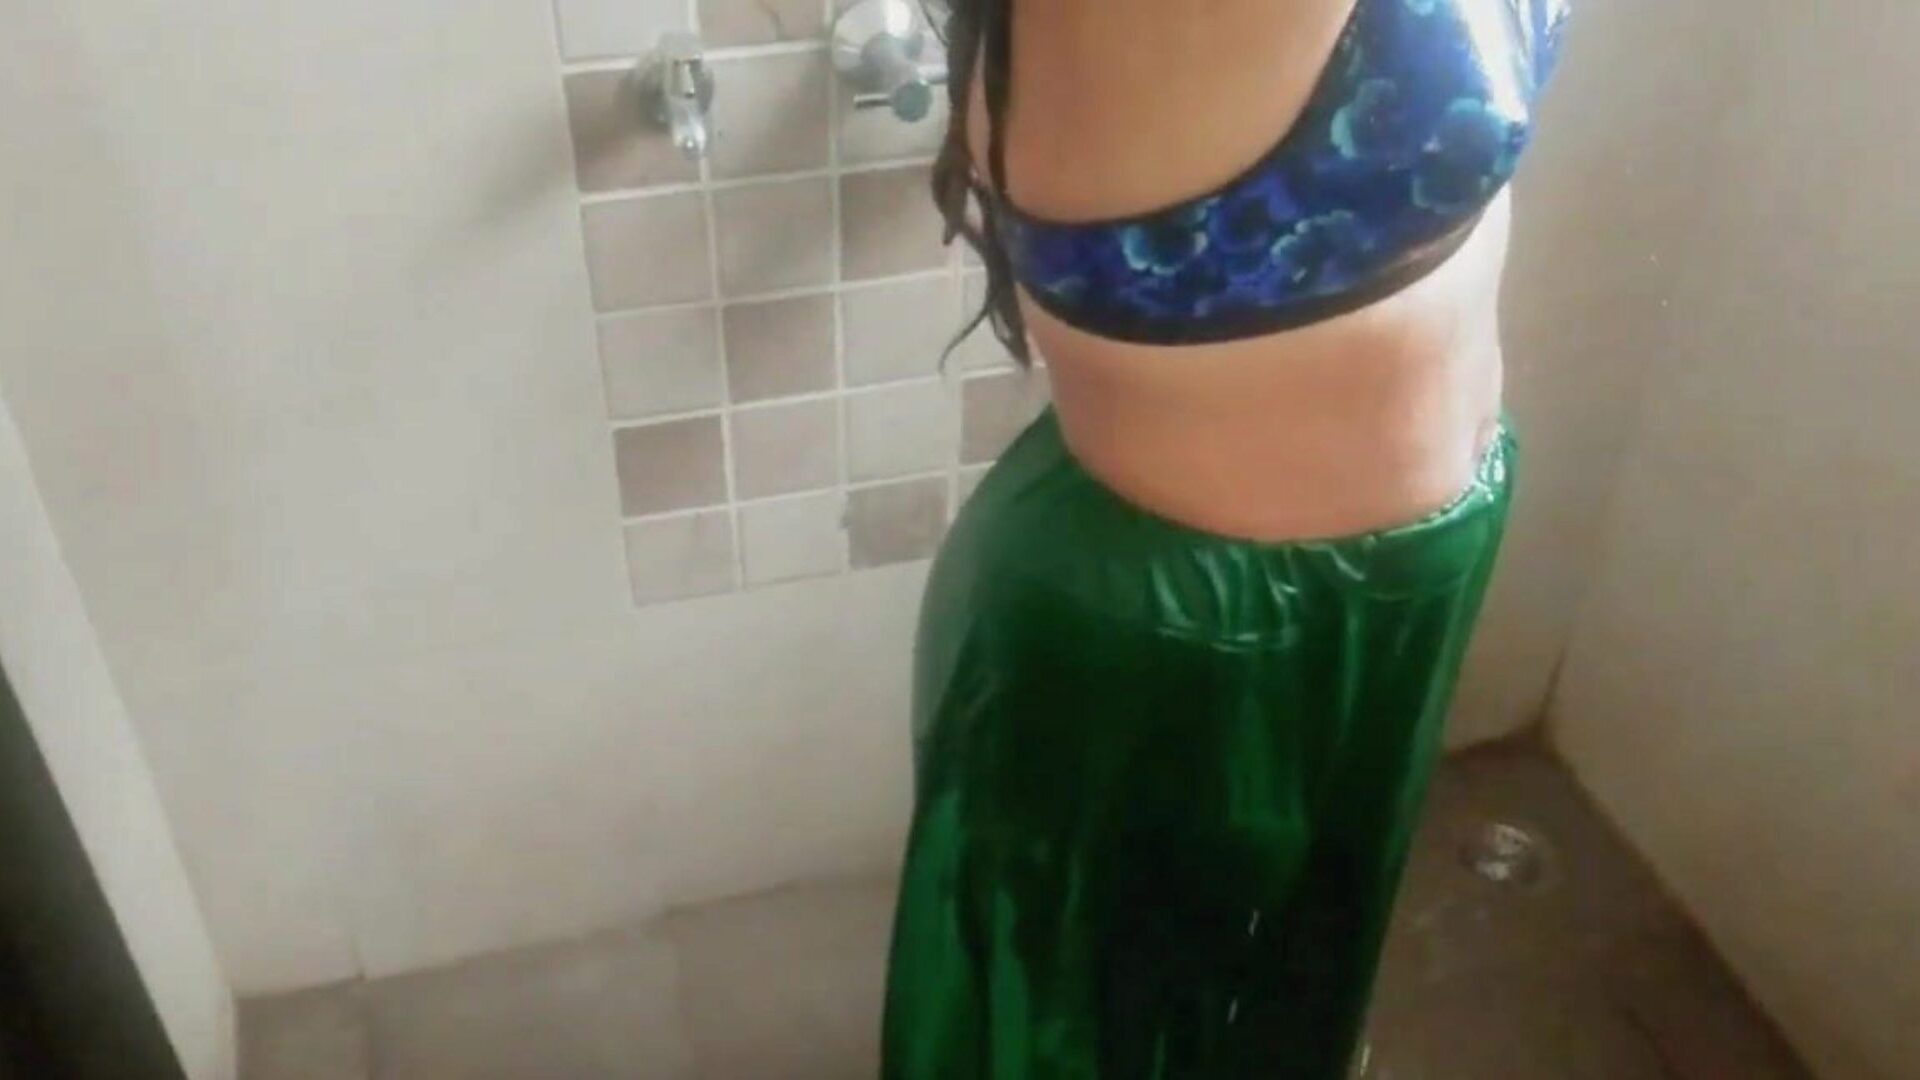 indian stepmom μπάνιο σεξ, δωρεάν ώριμη πορνό a2: xhamster παρακολουθήστε ινδική stepmom μπάνιο σεξ ταινία σκηνή στο xhamster, ο μεγαλύτερος ιστότοπος hd fuck-festival Tube με τόνους δωρεάν για όλους ασιατικούς ώριμους & redtube δωρεάν σεξ πορνό βίντεο